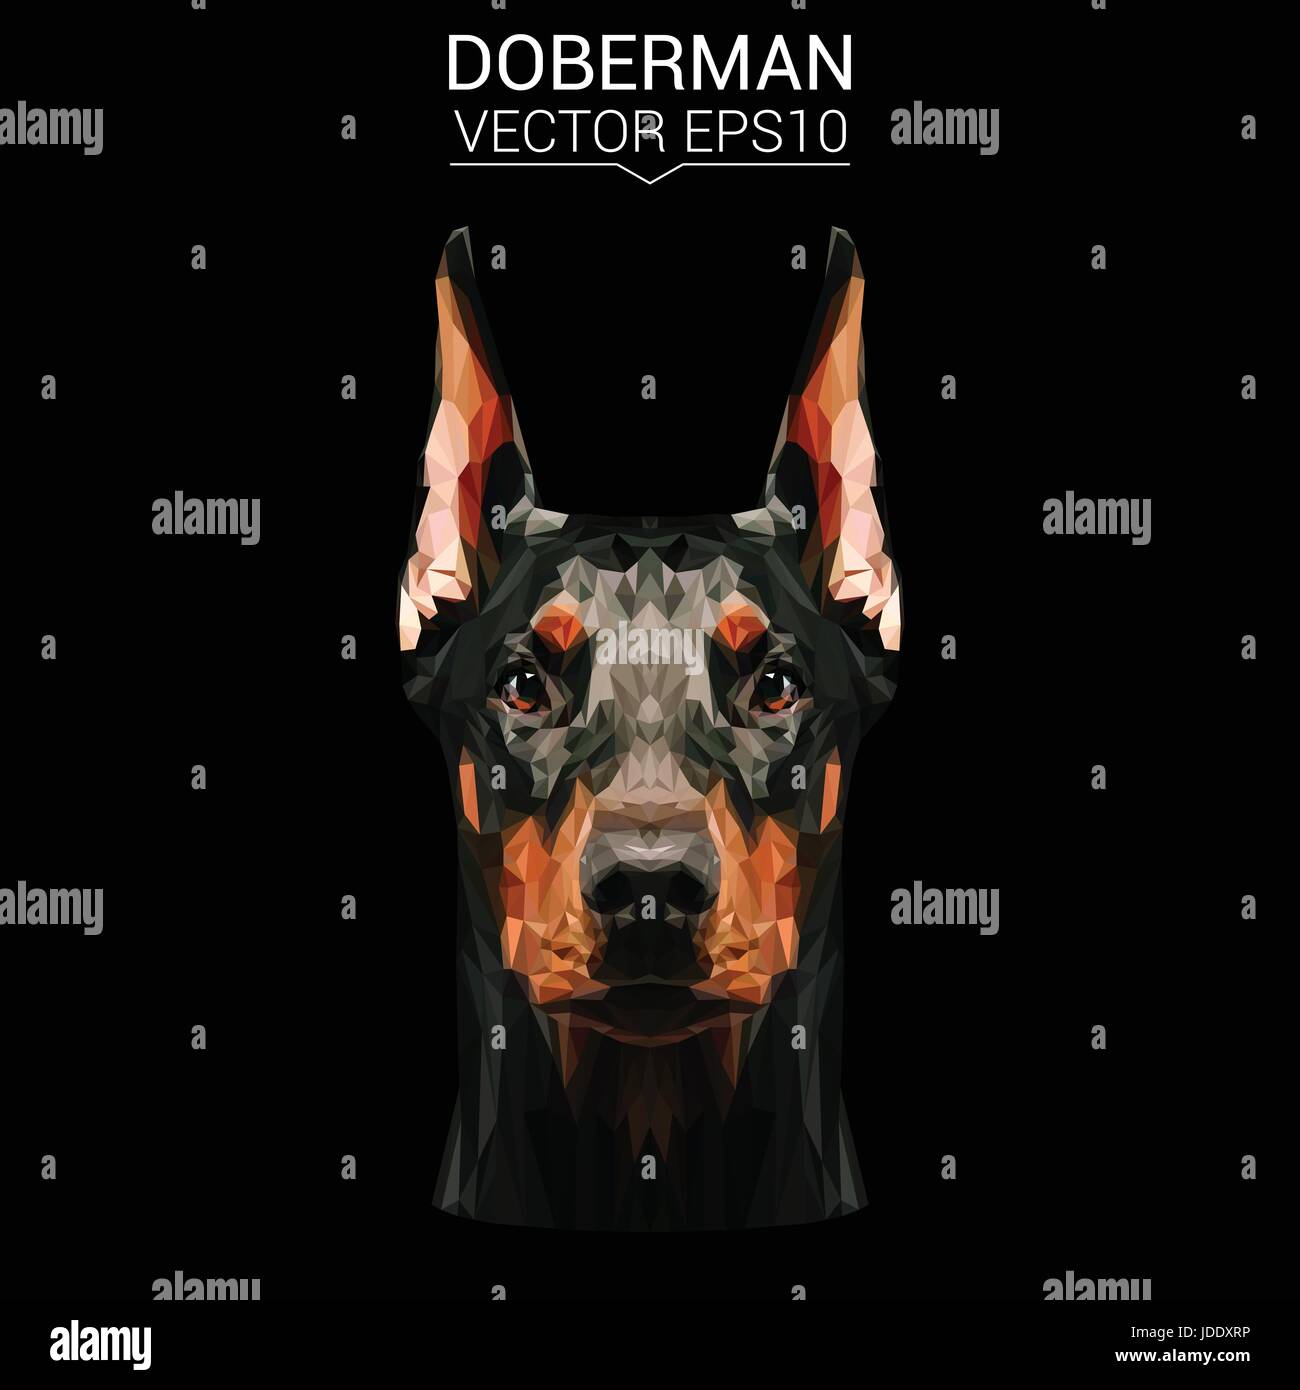 Doberman cane bassa animale poli design. Triangolo illustrazione vettoriale. Illustrazione Vettoriale